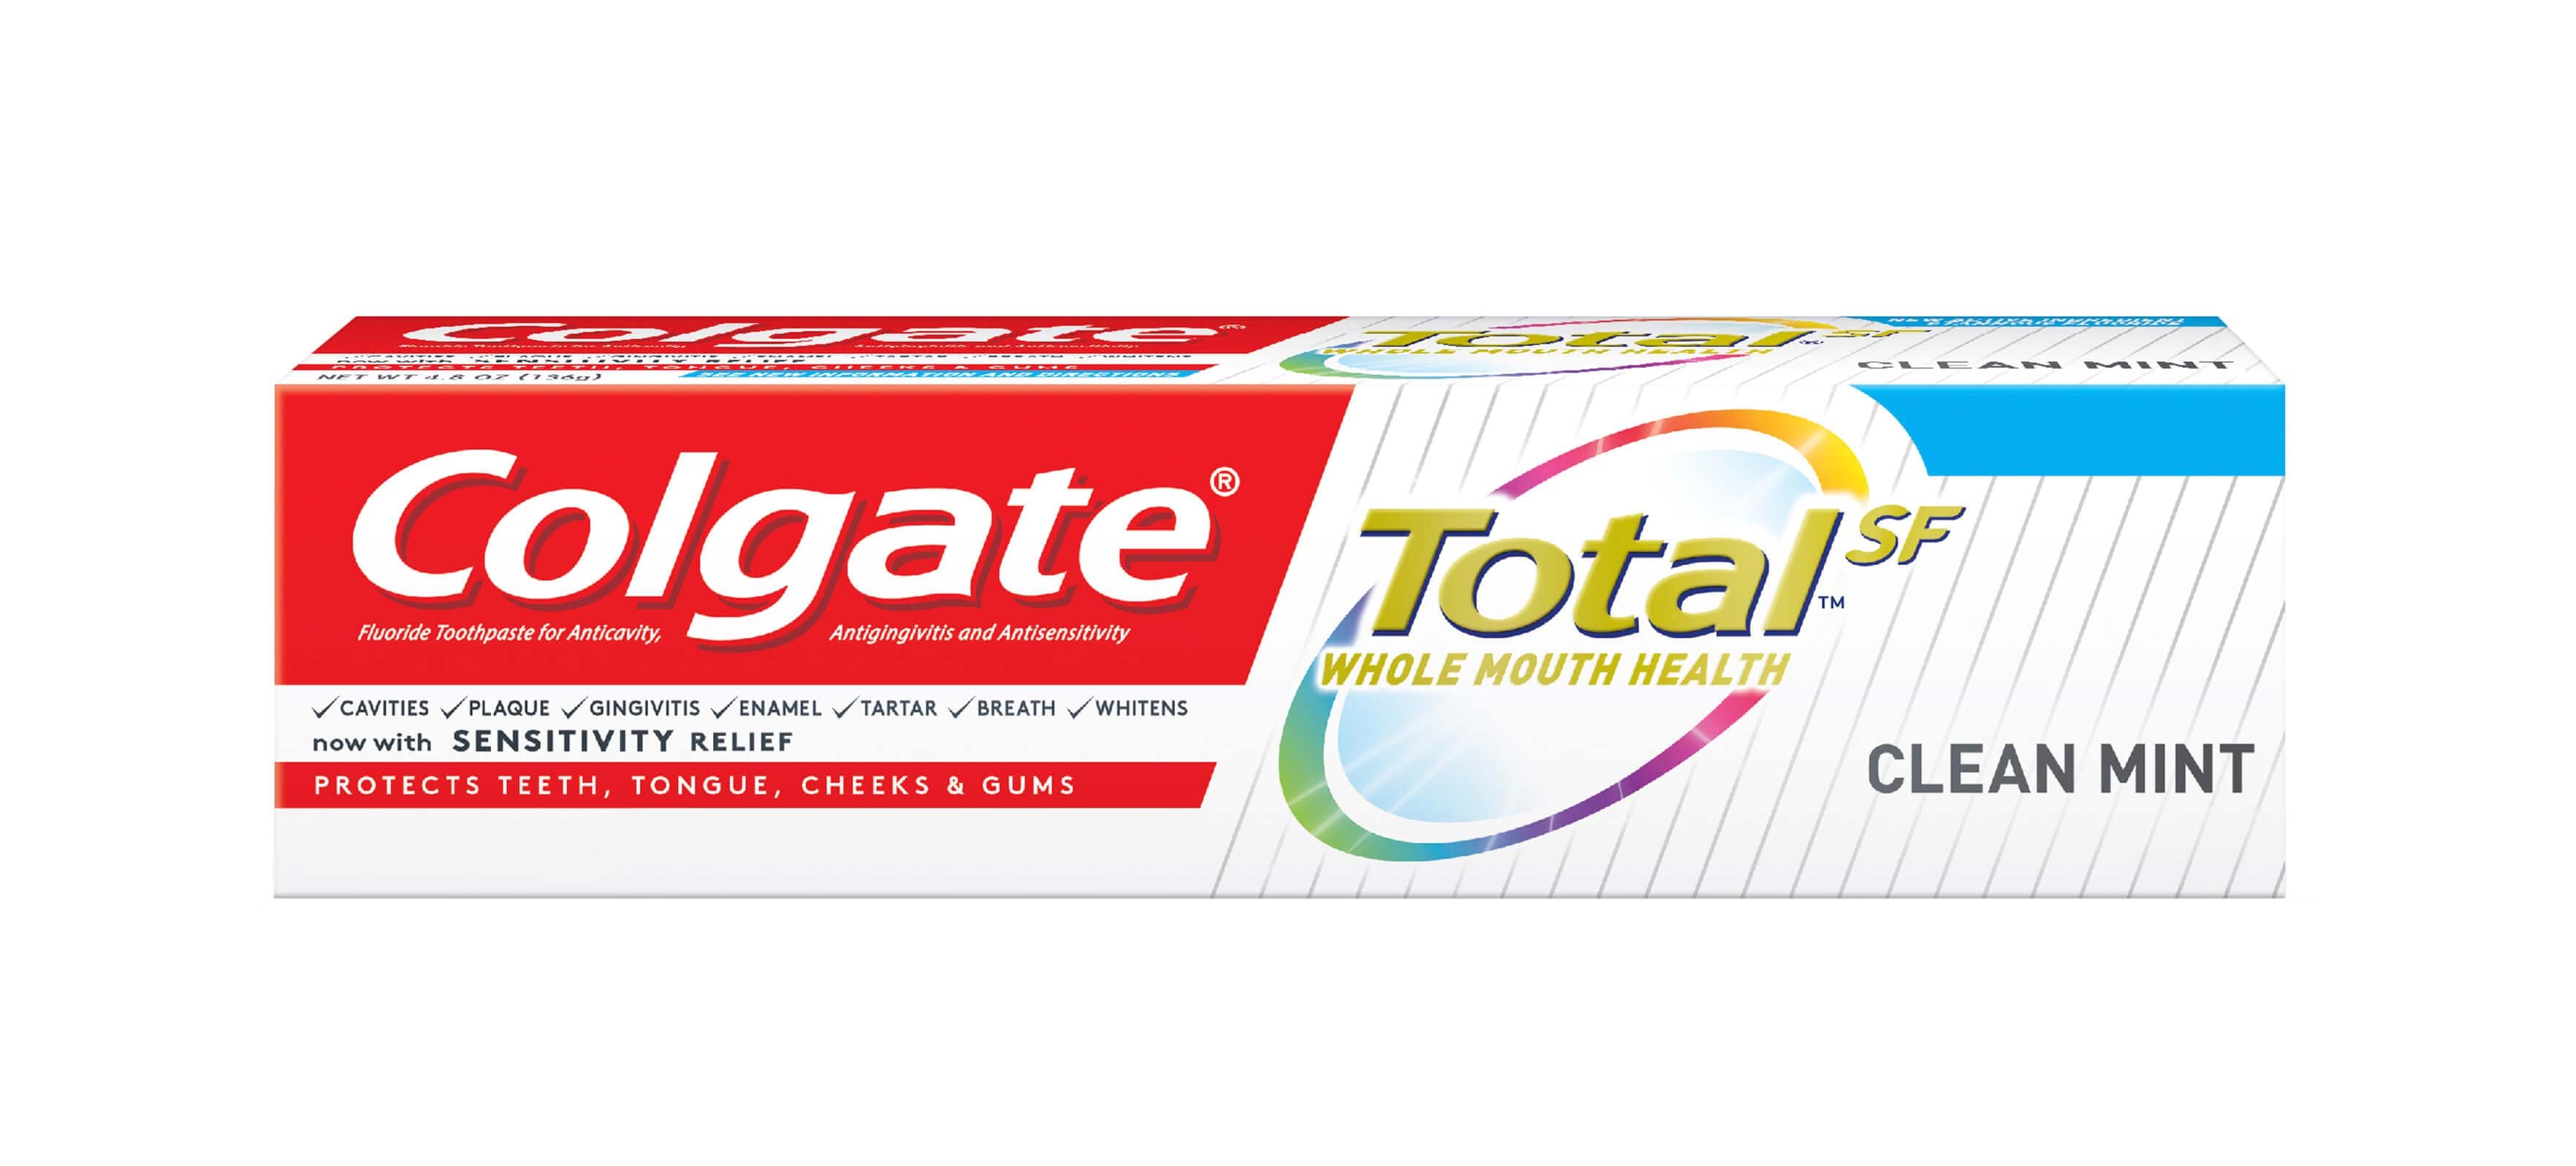 Colgate total toothpaste box 